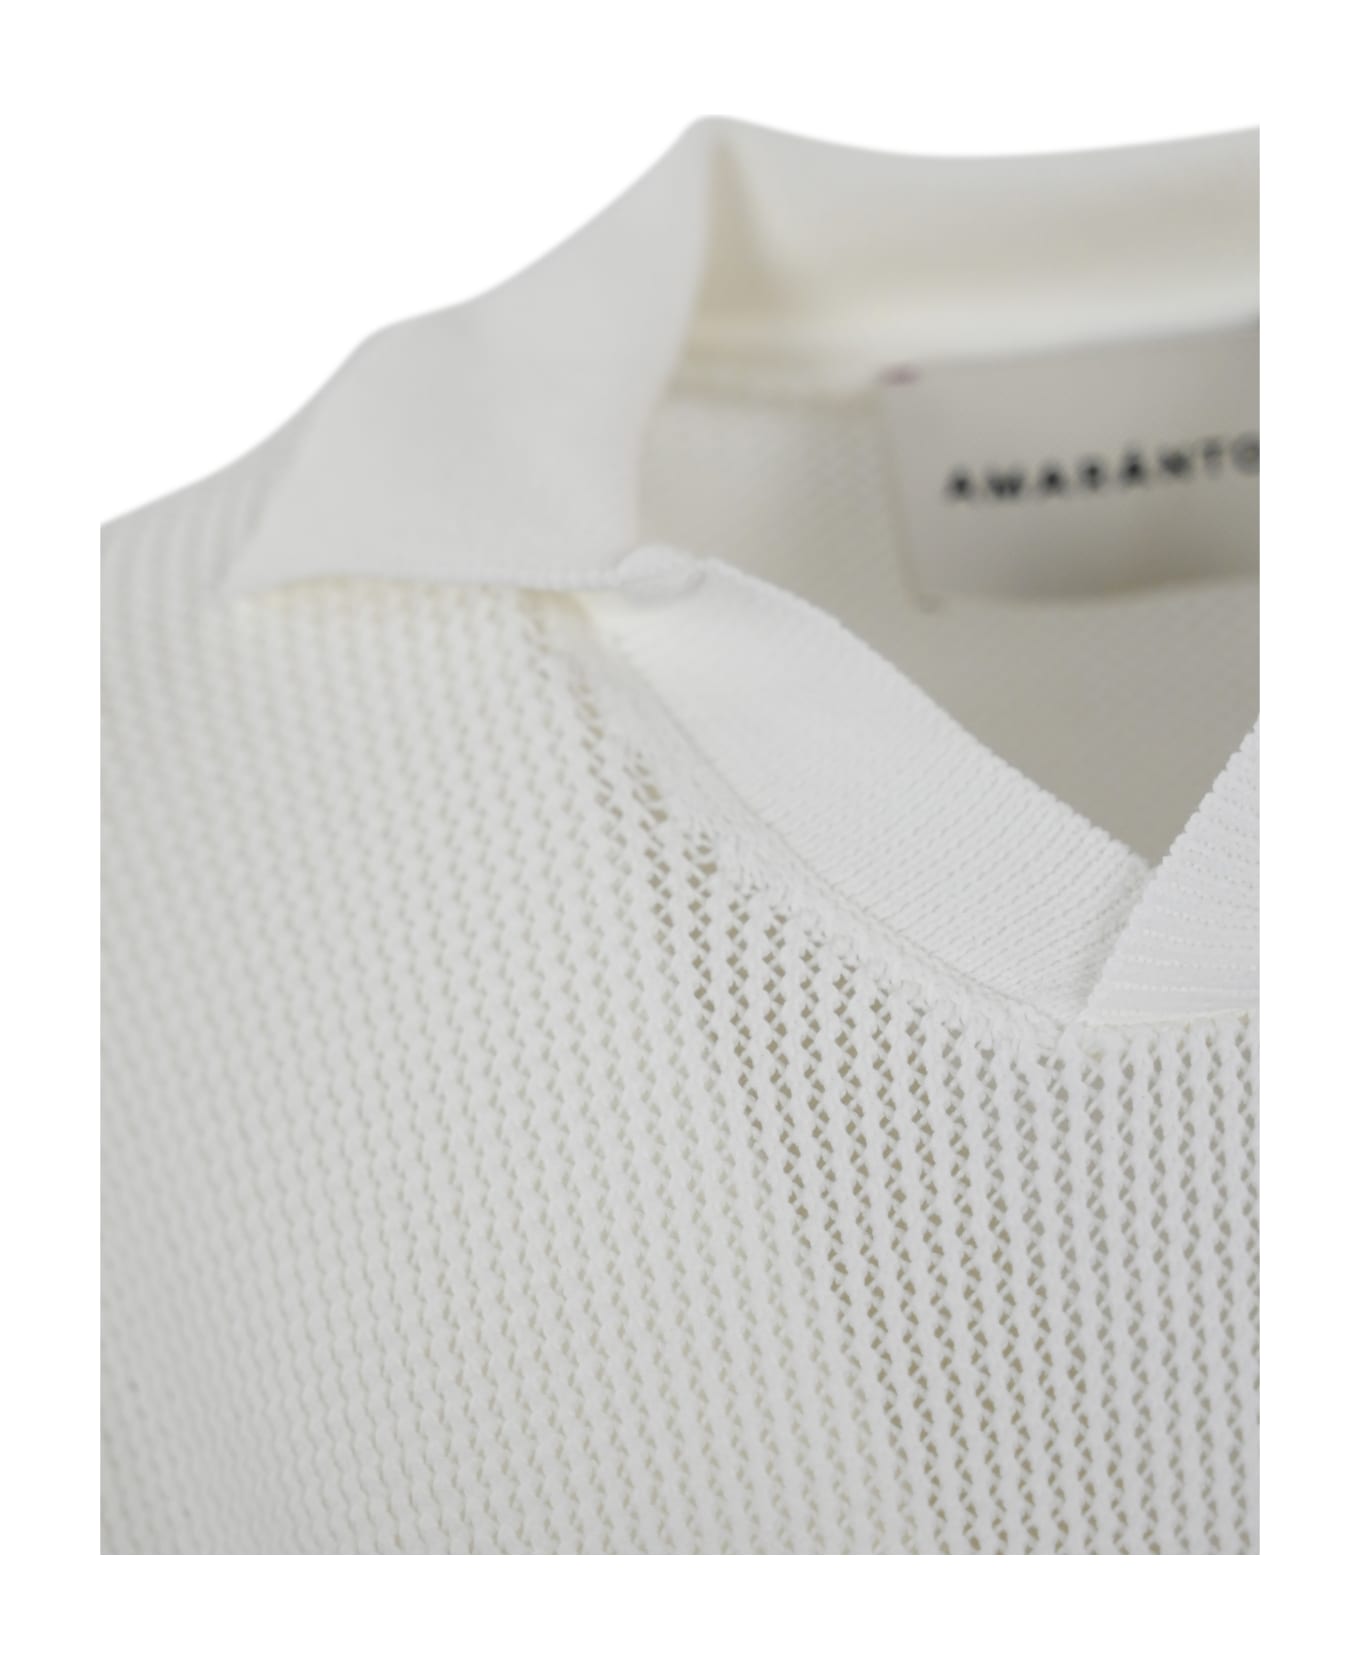 Amaranto Polo Style Shirt - Bianco